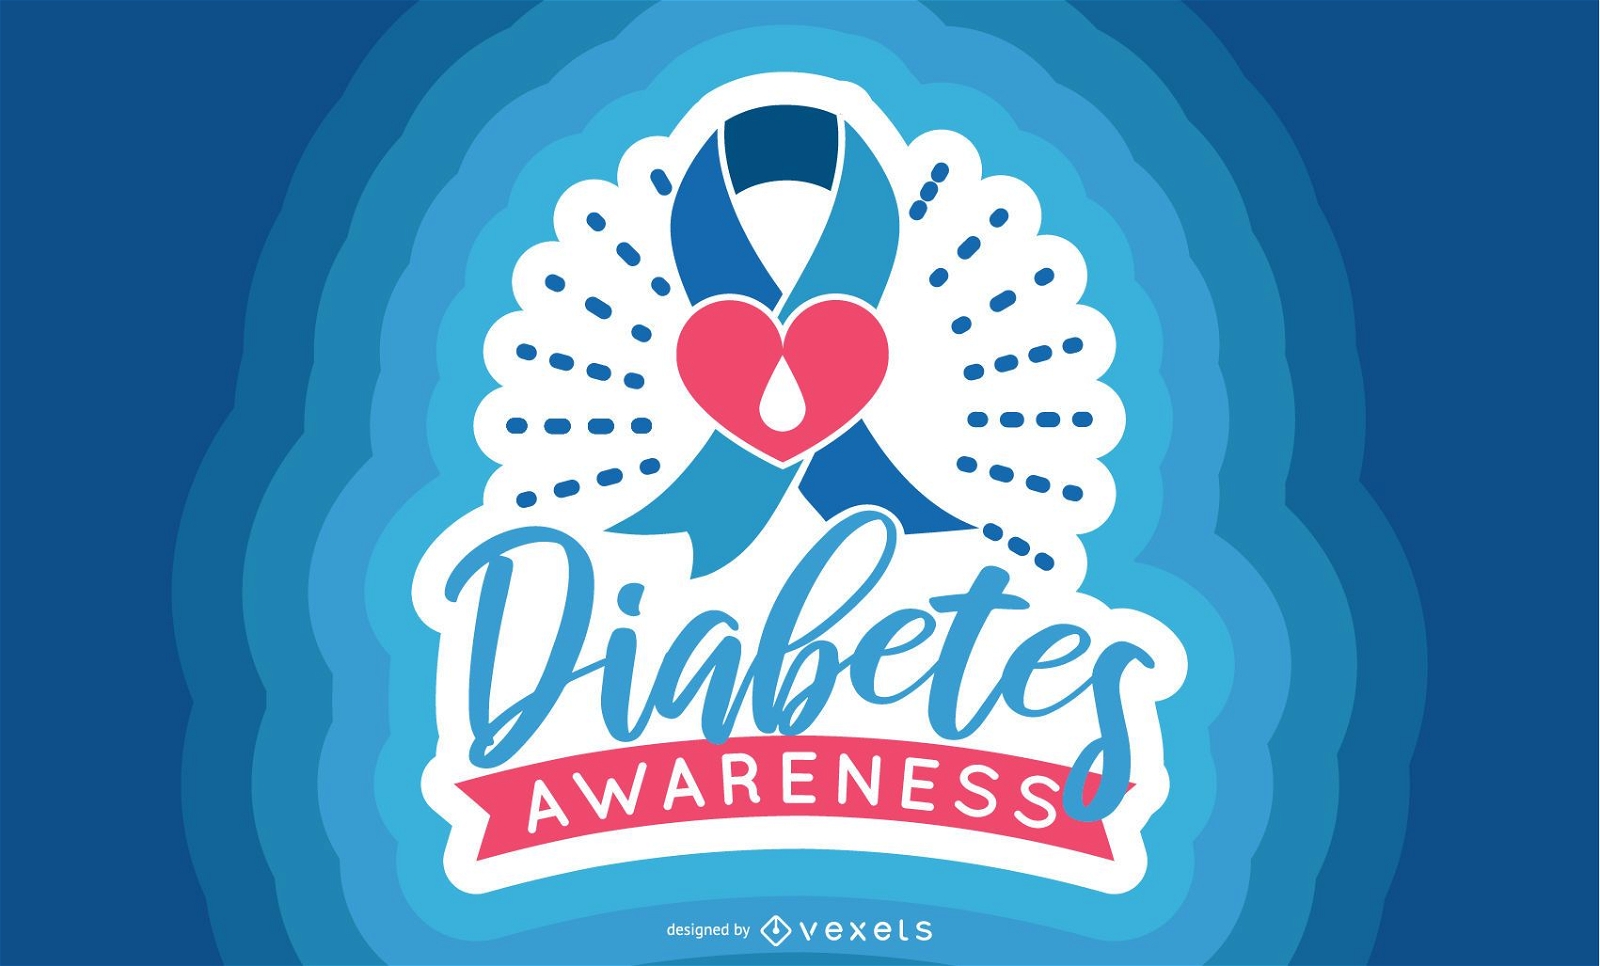 Diabetes awareness banner design